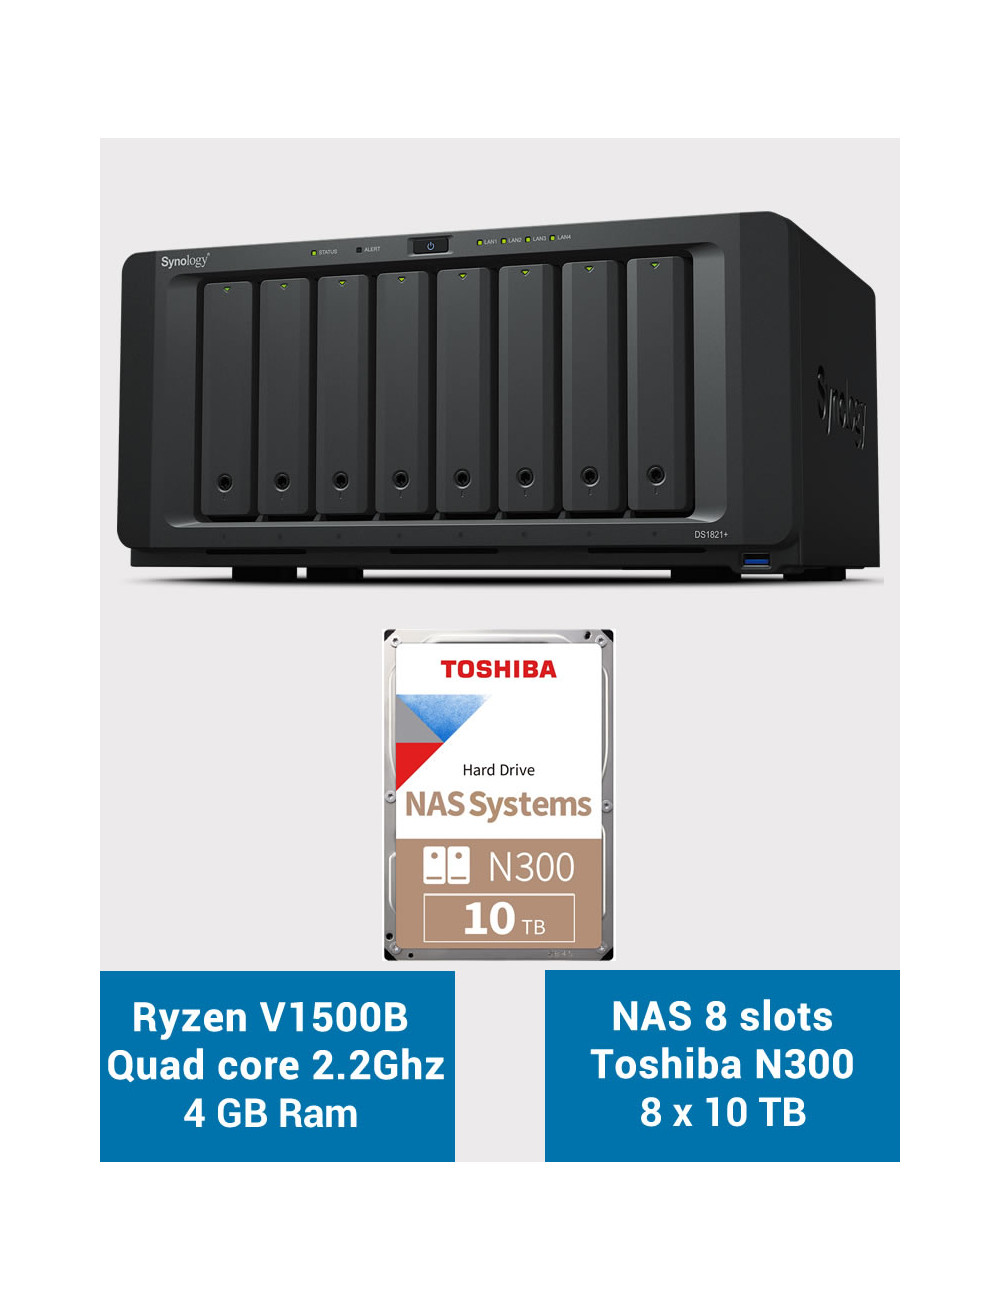 Synology DS1821+ Servidor NAS de 8 bahías Toshiba N300 80TB (8x10TB)